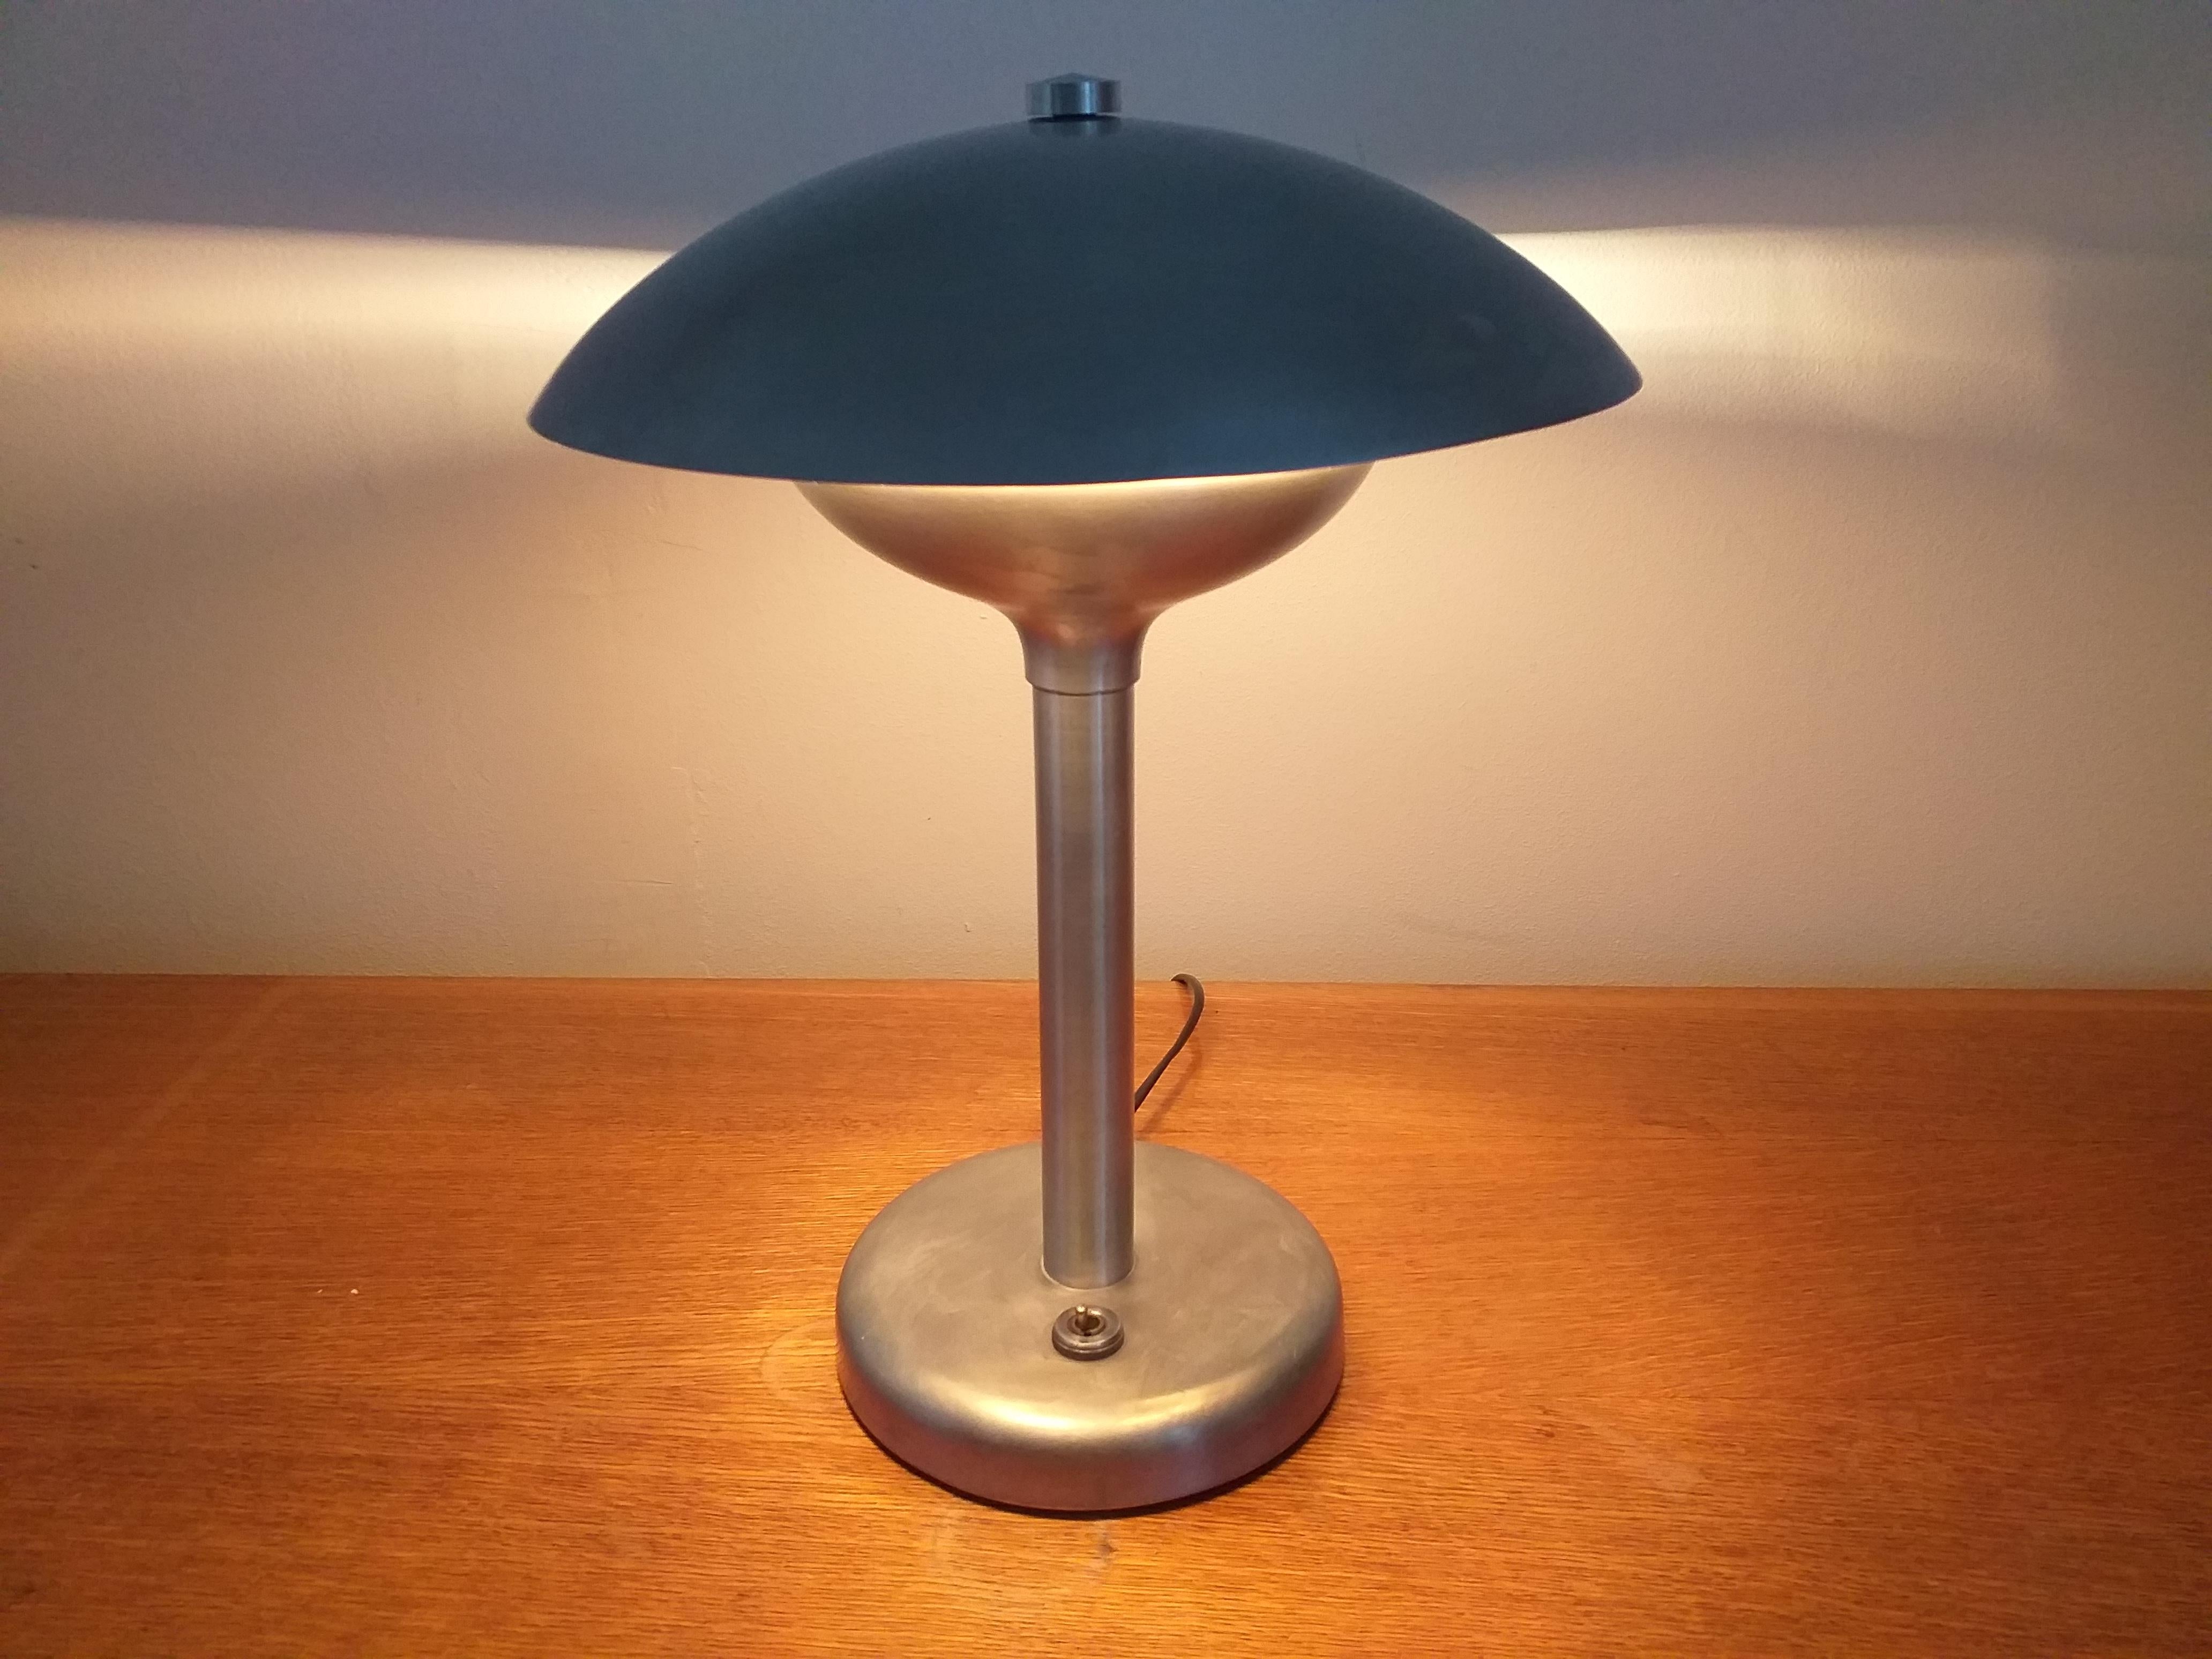 Art Deco Table Lamp, Franta Anyz, Functionalism, Bauhaus, 1930s 2